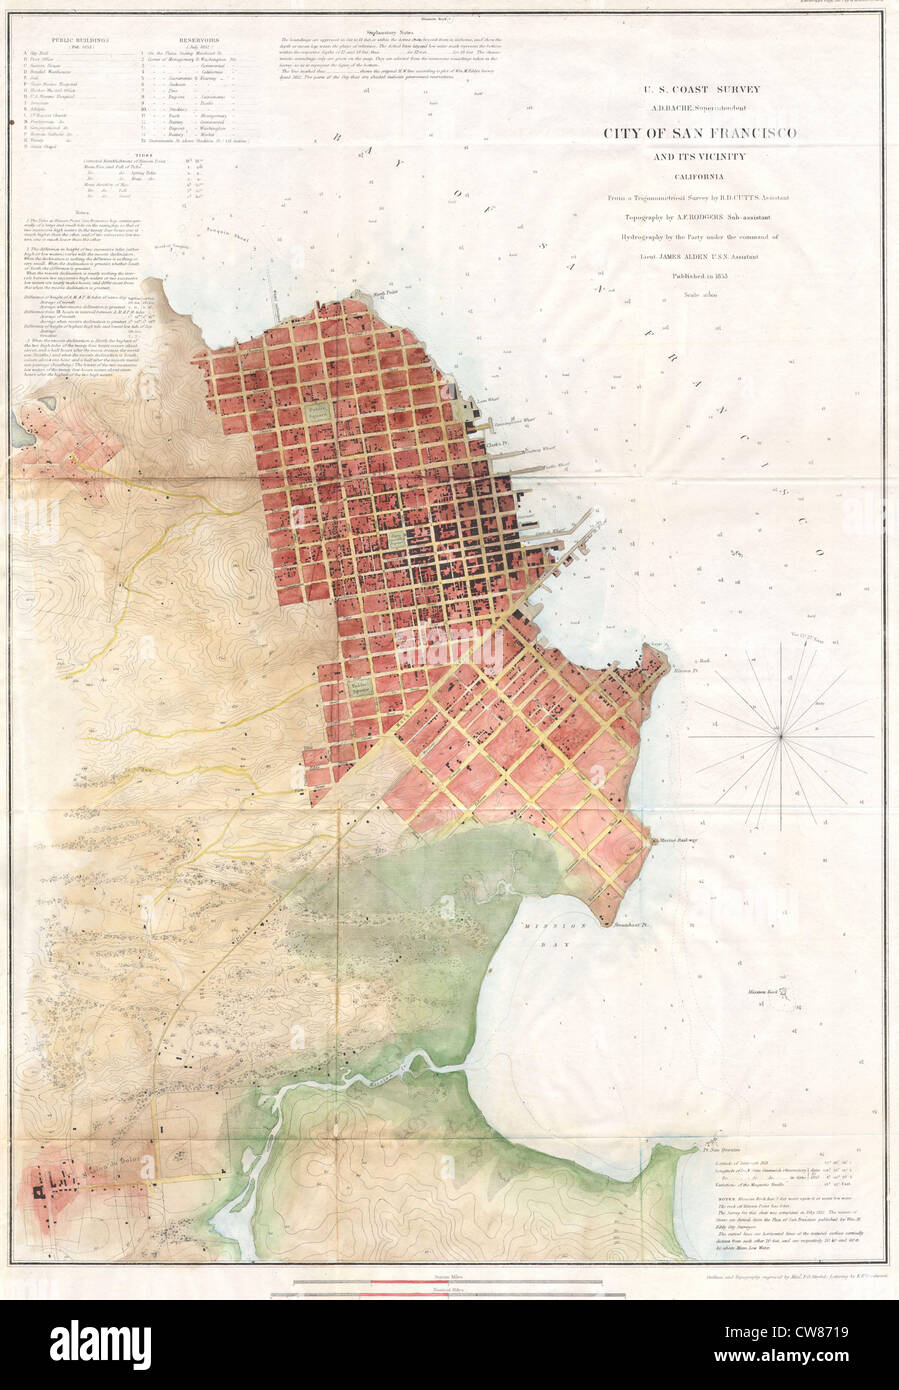 1853 U.S.C.S. Karte von San Francisco, Kalifornien ^ Nähe - Stockfoto